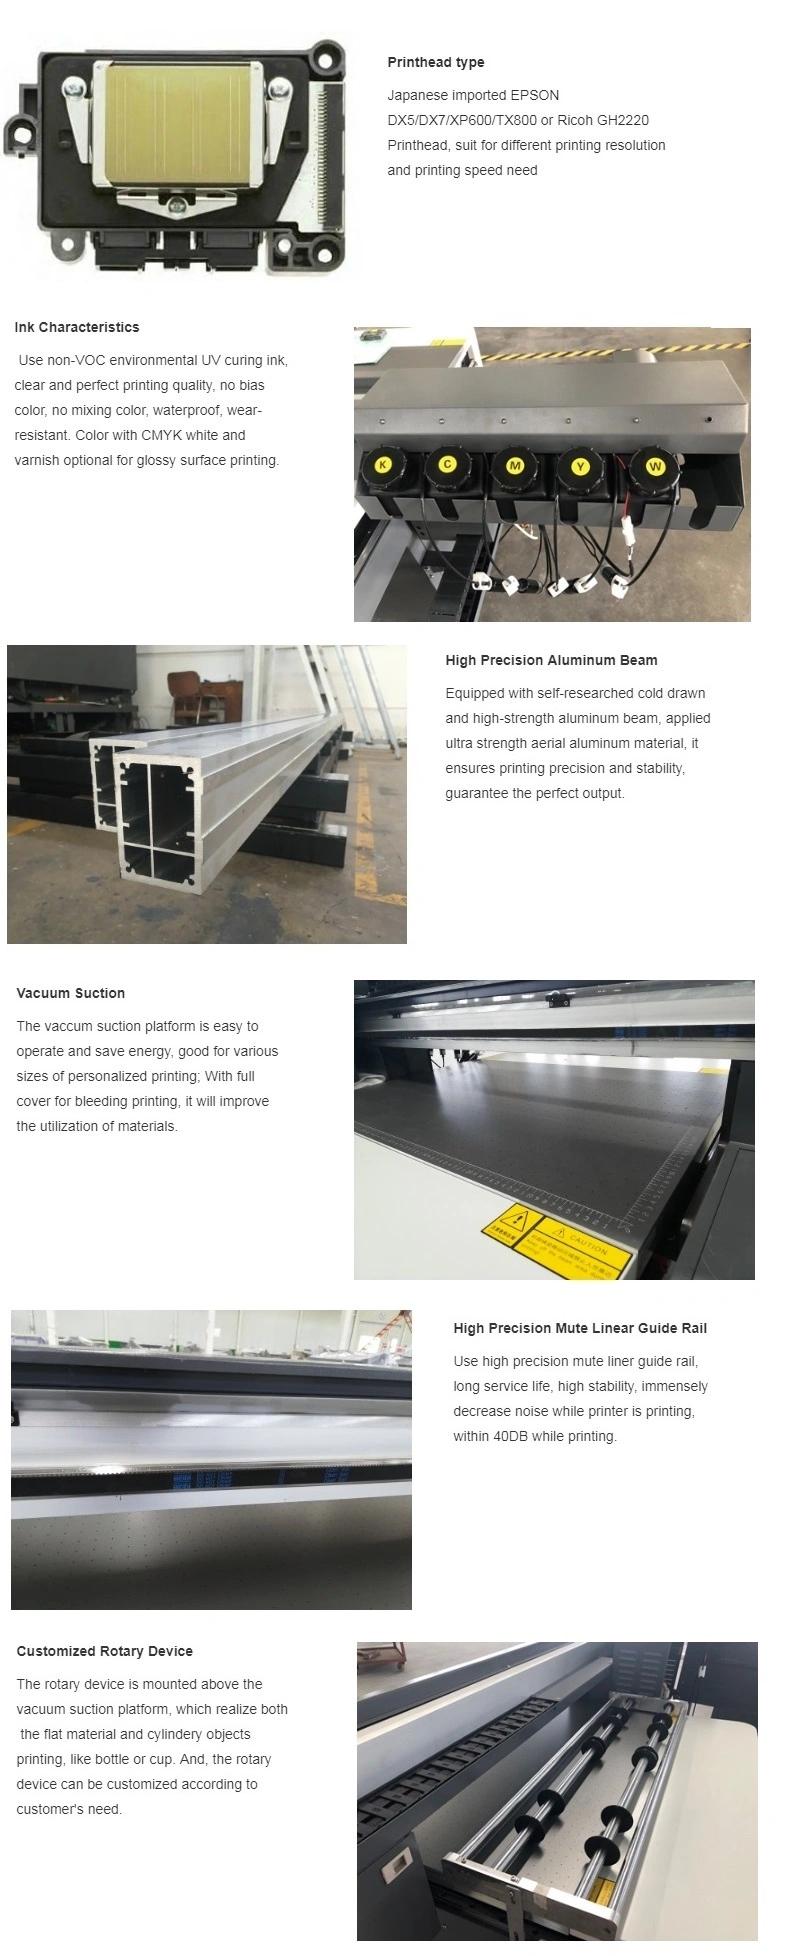 Ntek 6090 Glass Printing Machine UV Flatbed Printer